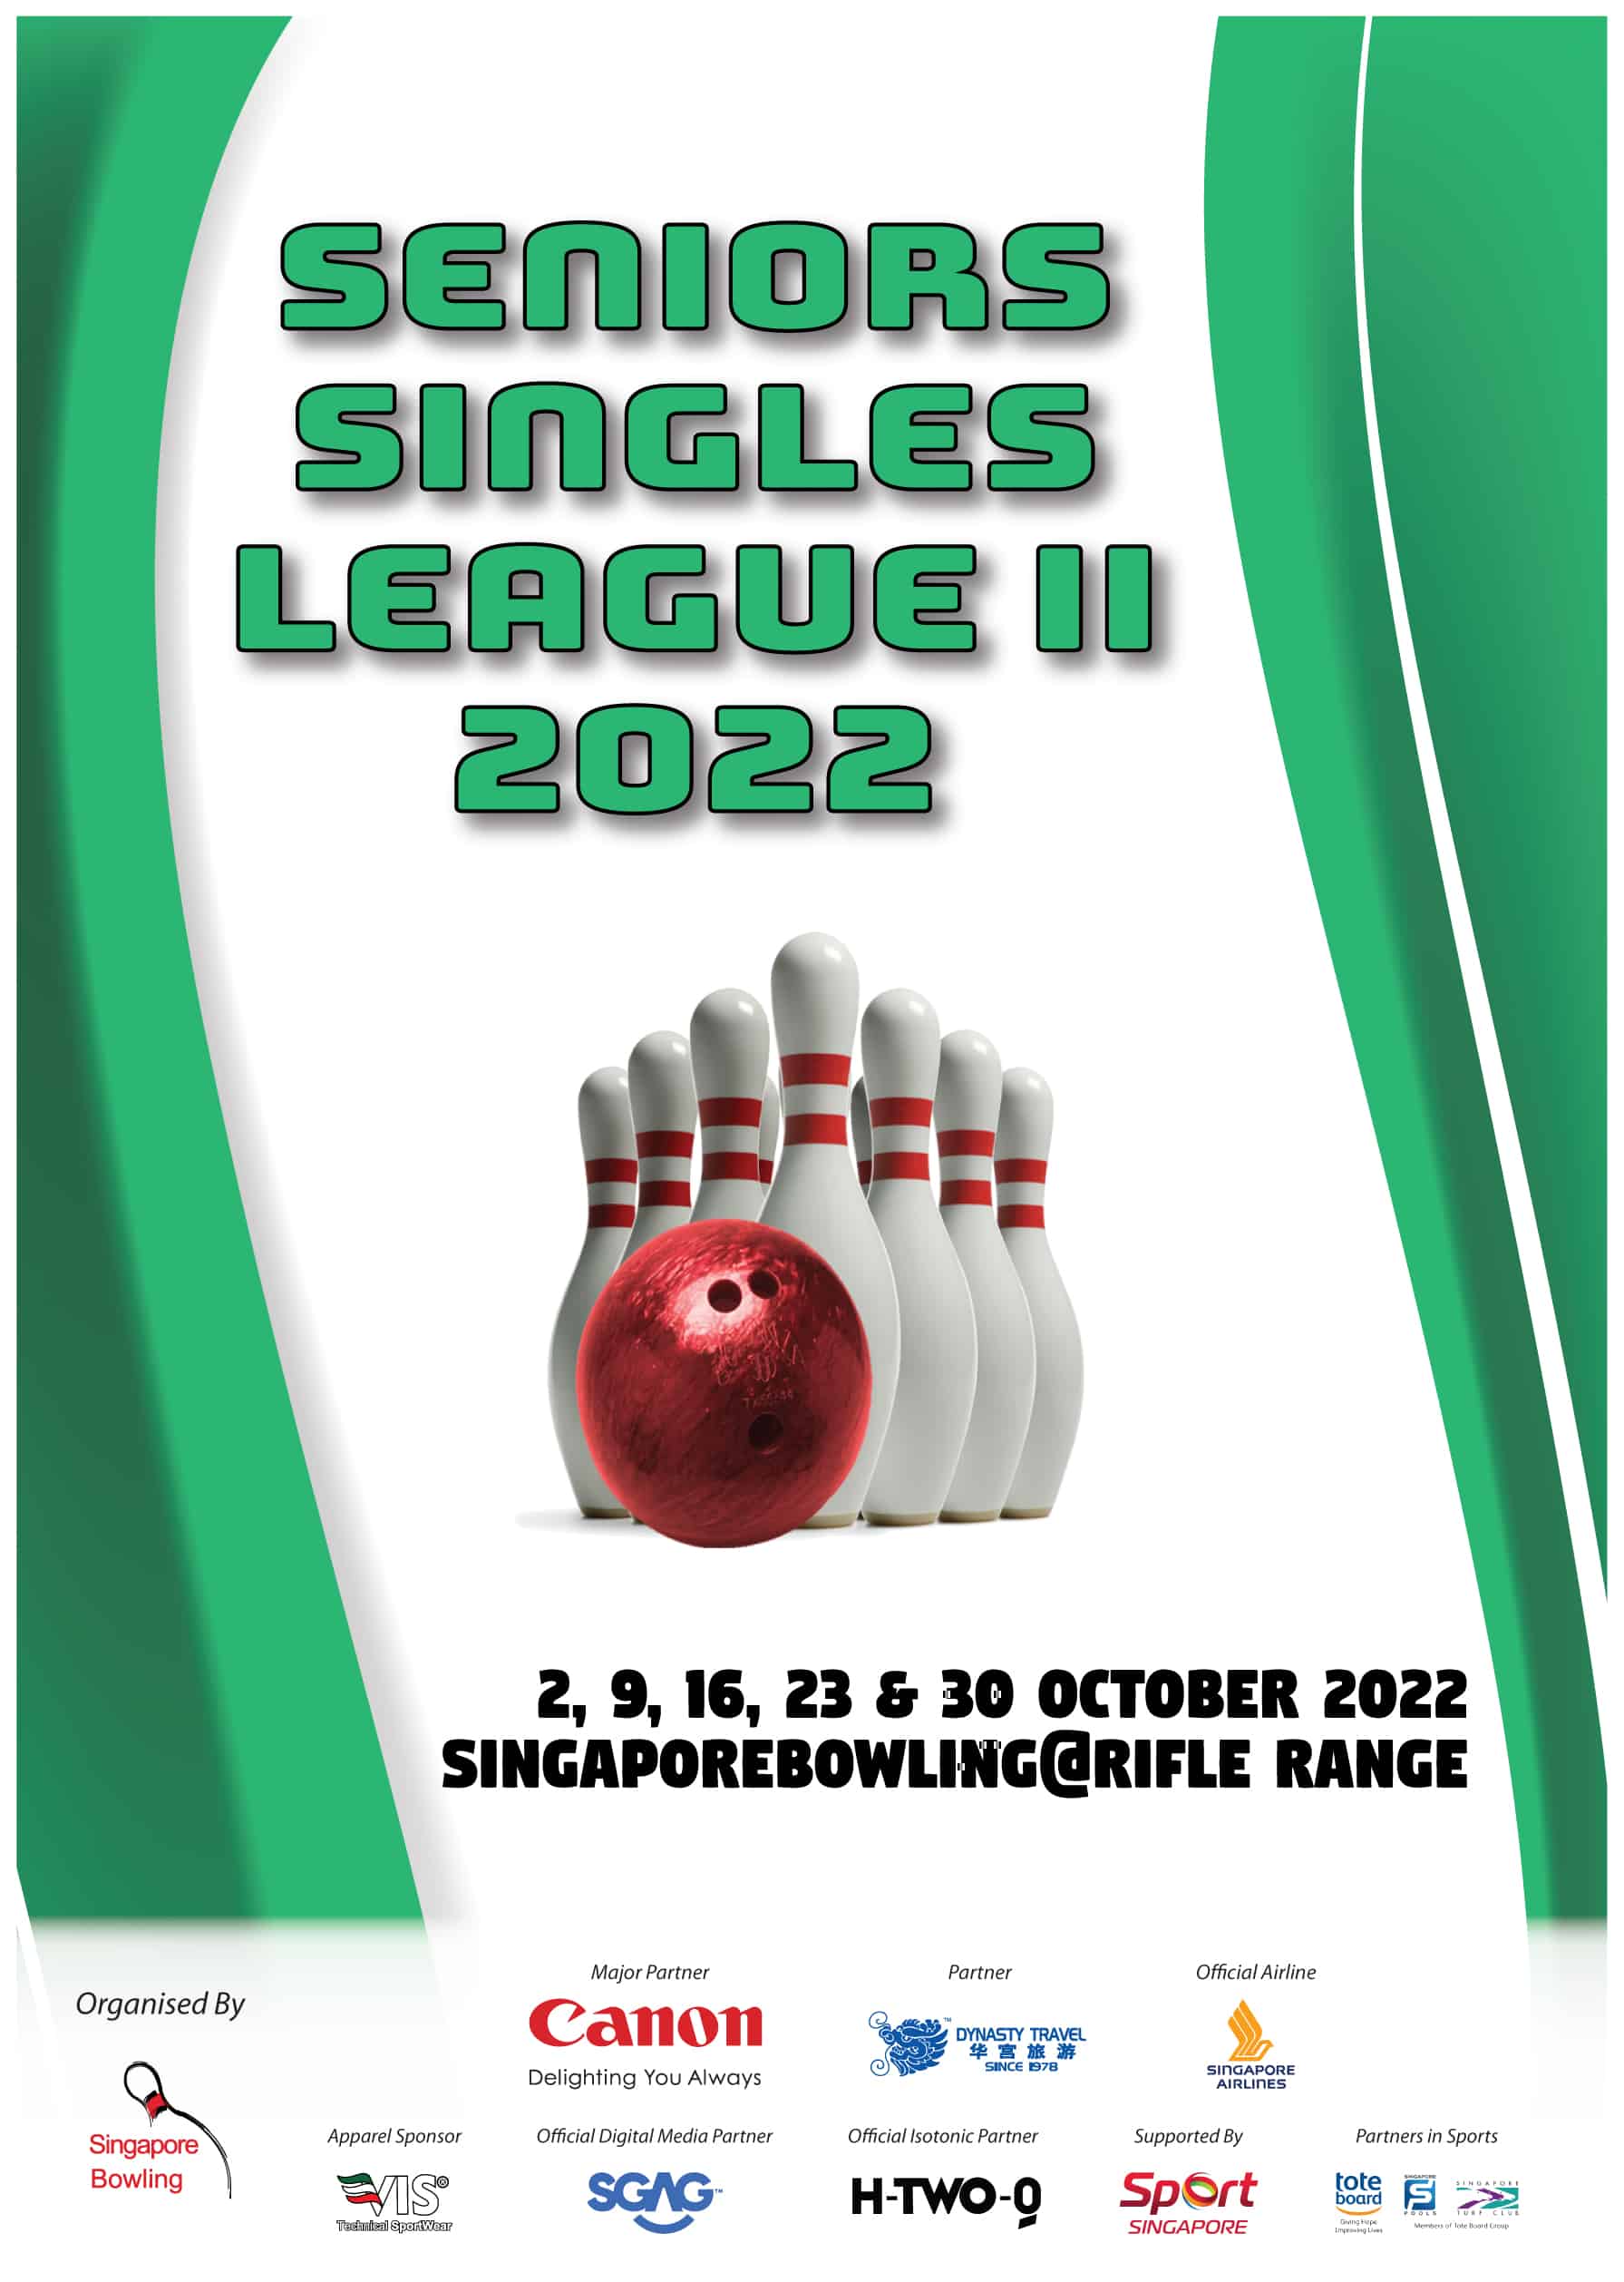 Seniors Singles League II 2022